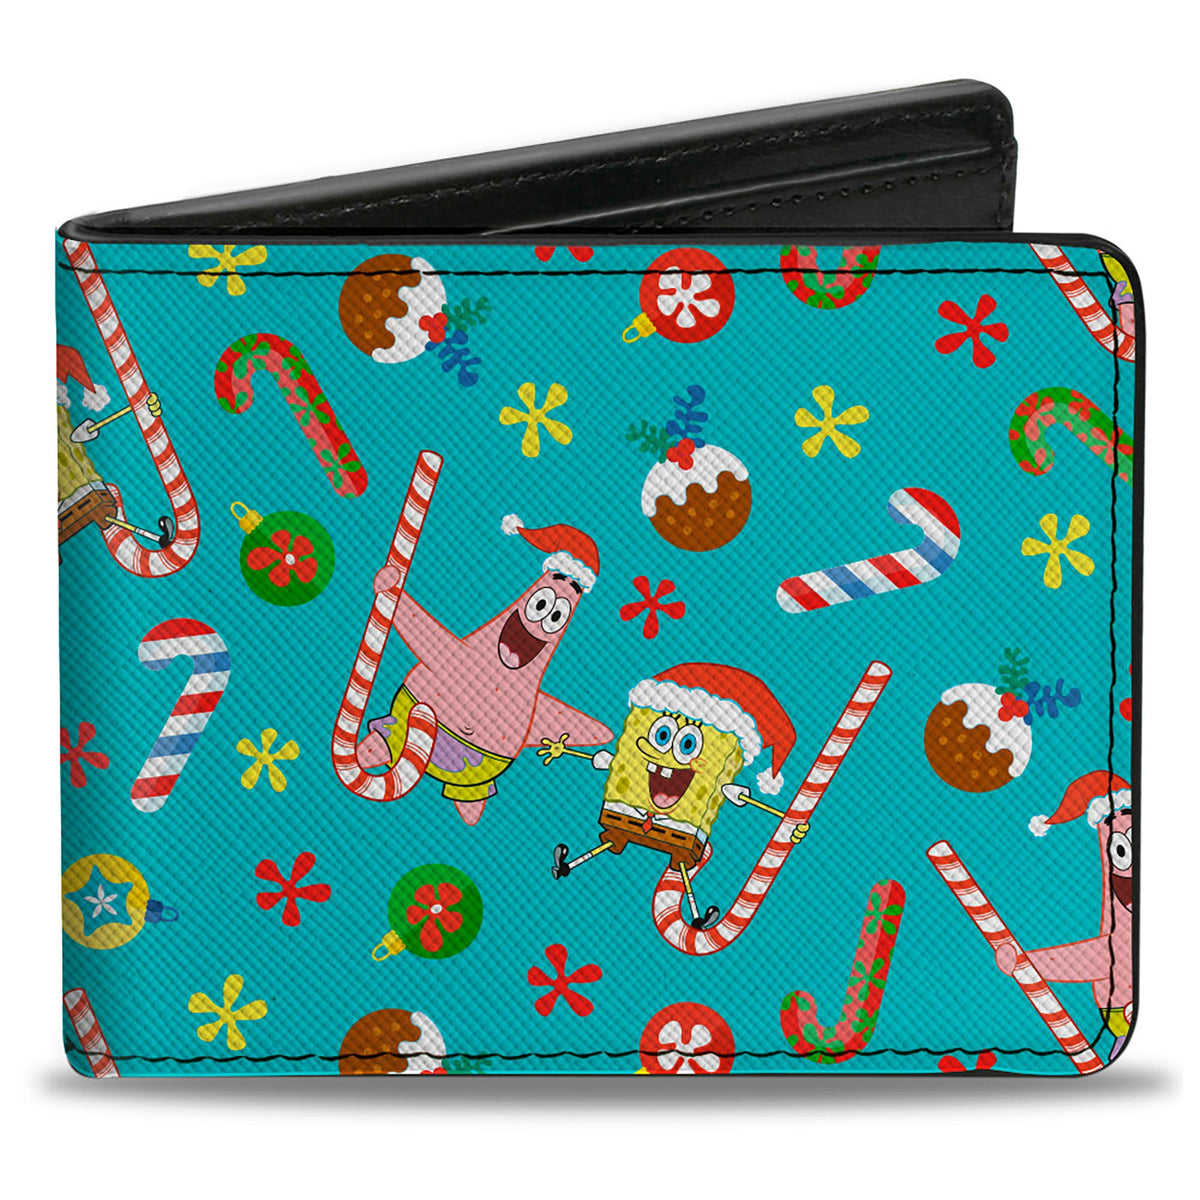 Bi-Fold Wallet - SpongeBob SquarePants and Patrick Star Holiday Treats Christmas Collage Turquoise